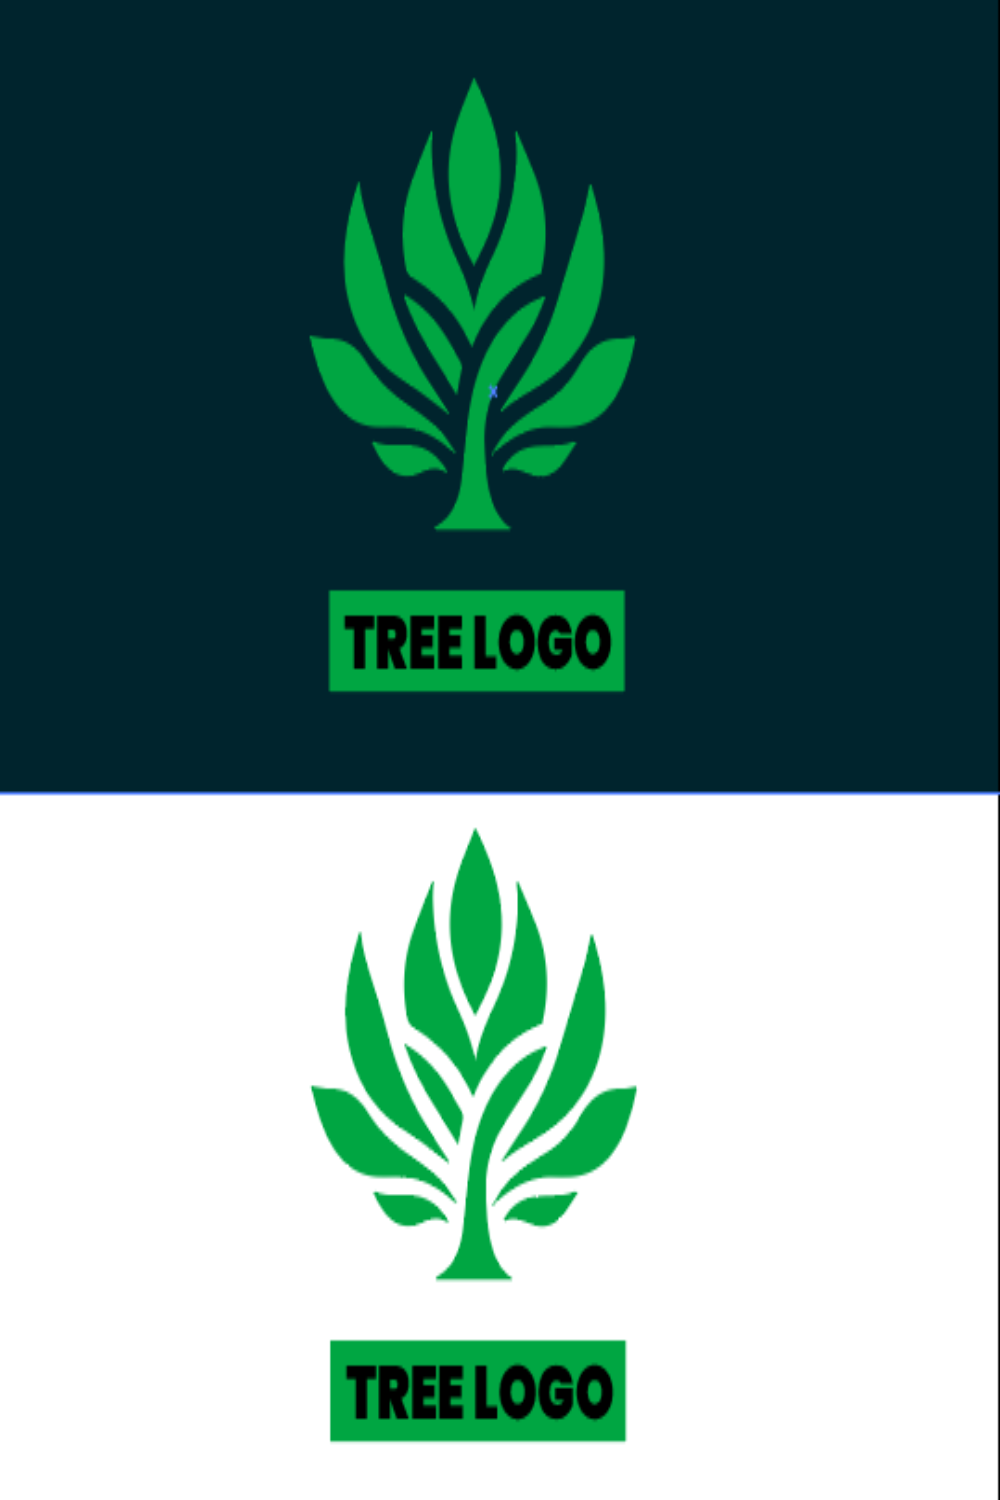 TREE Logo pinterest preview image.